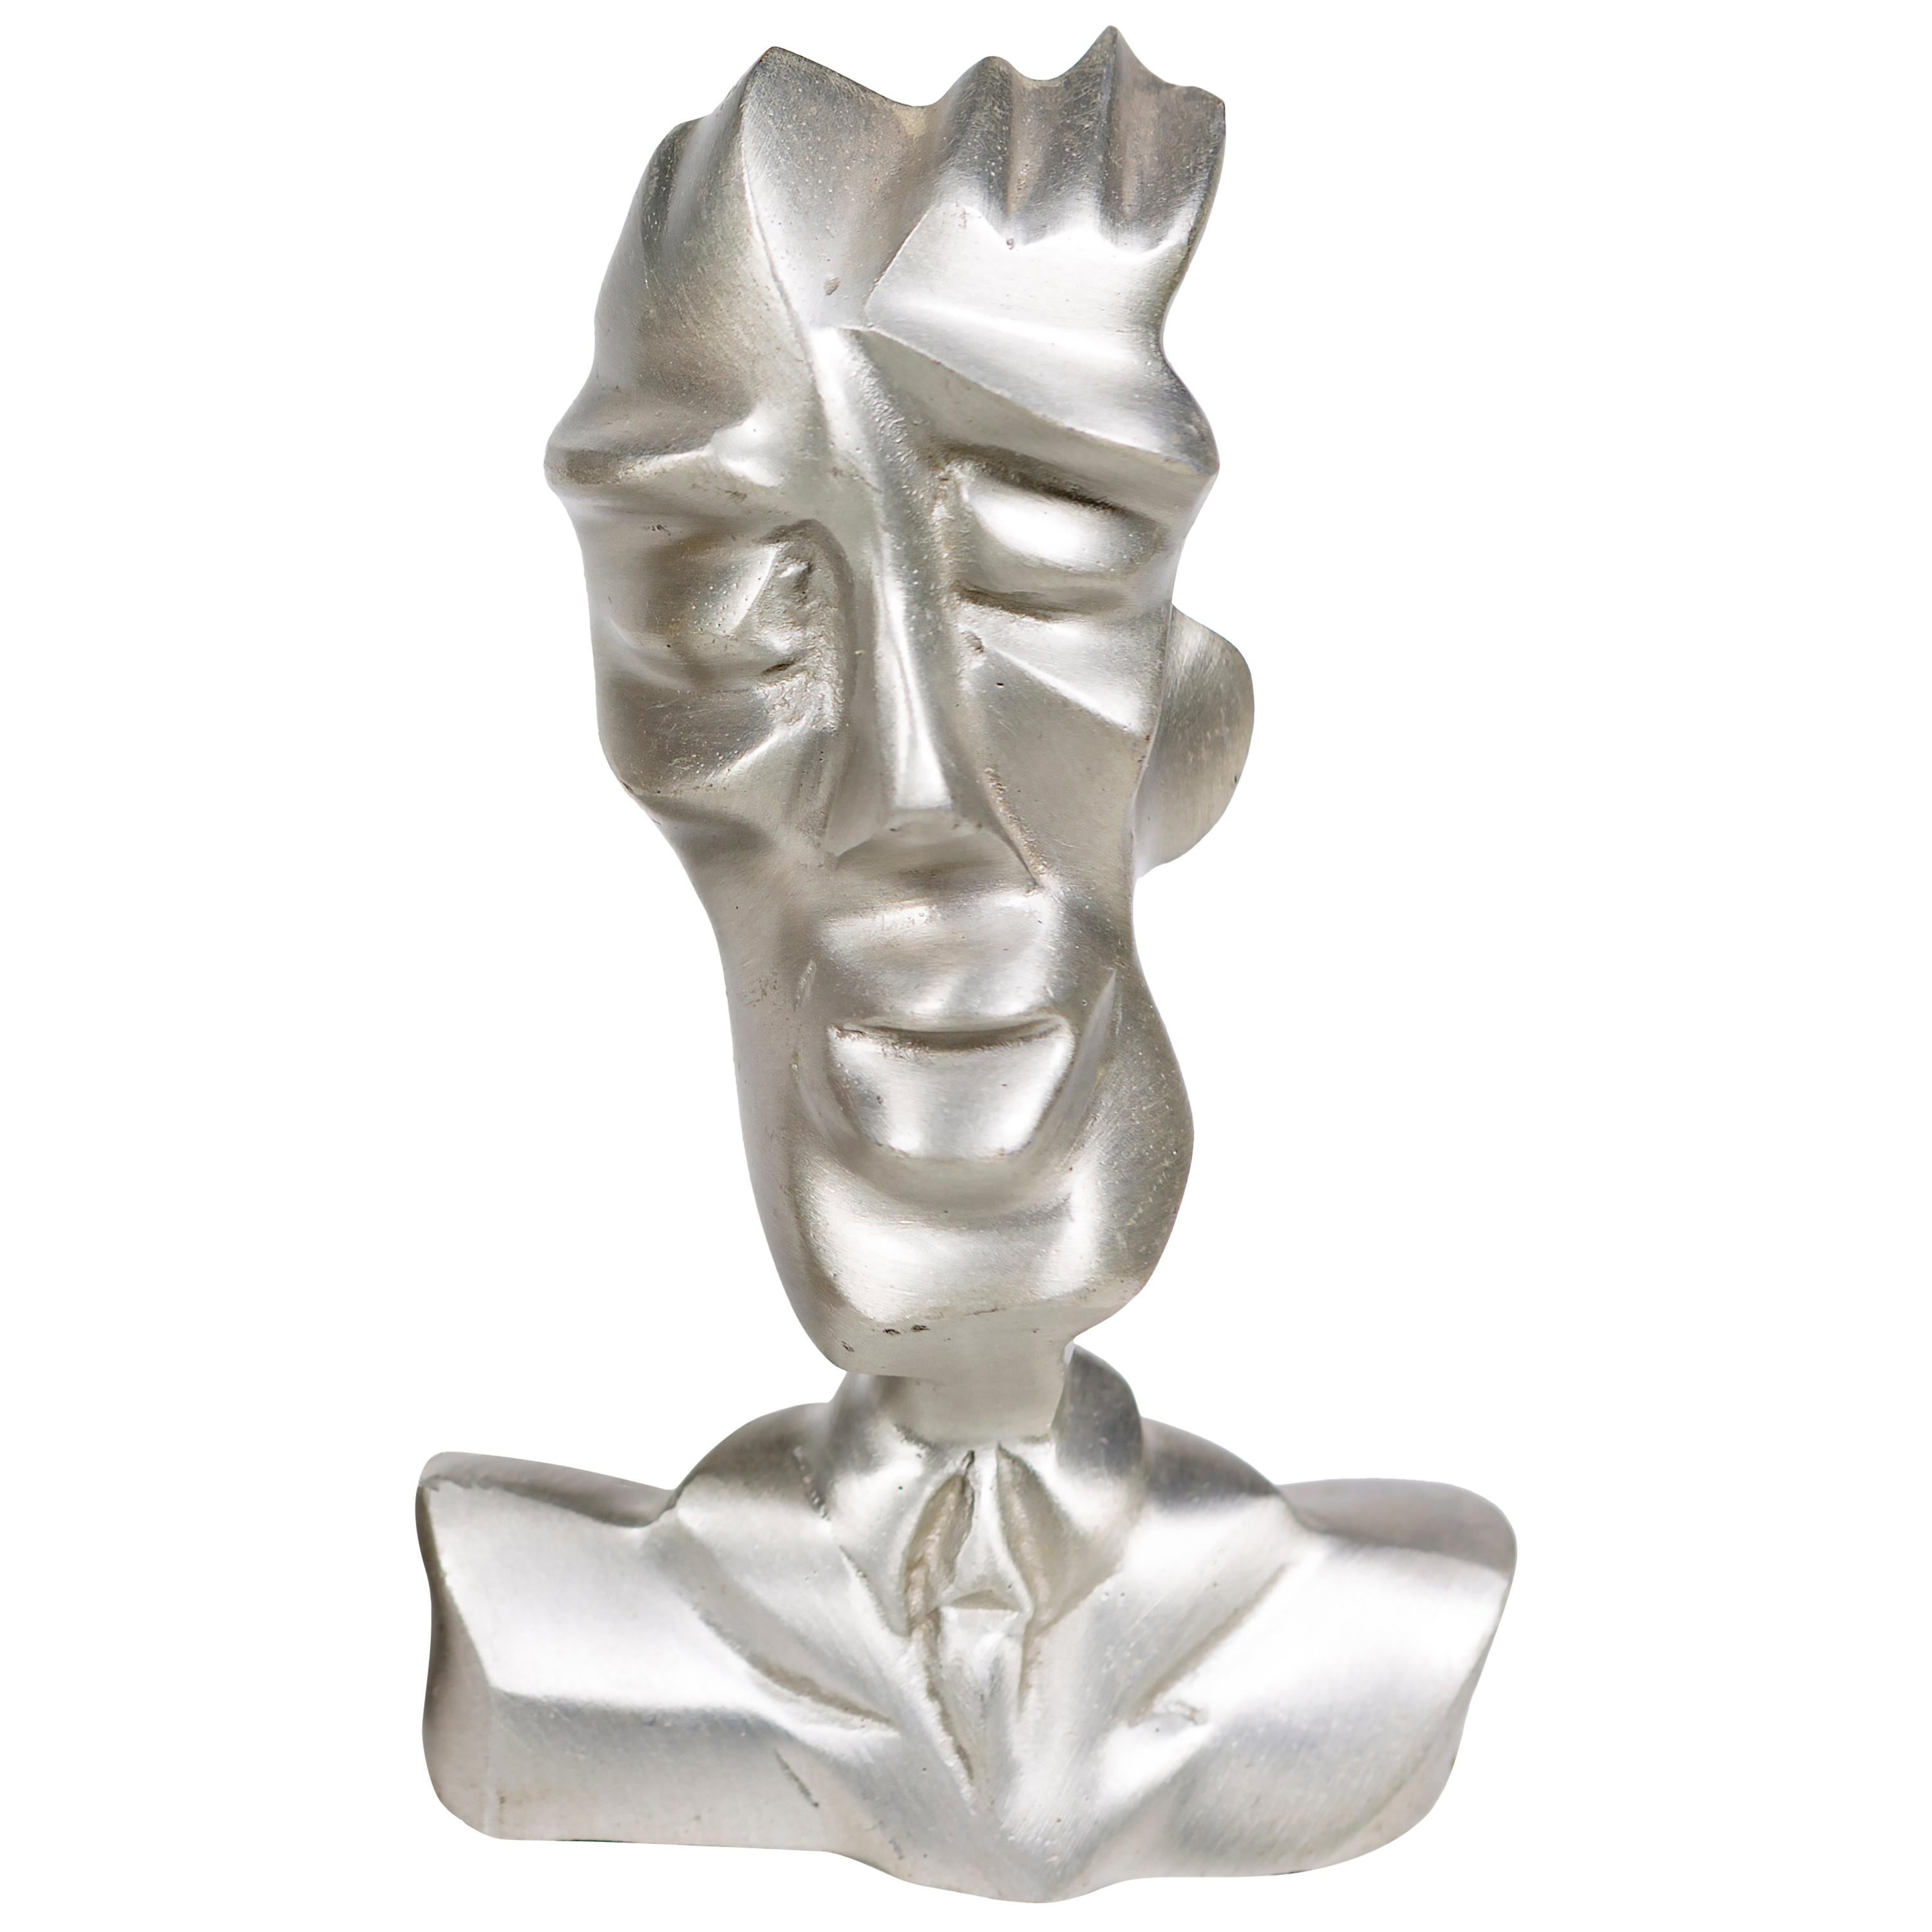 Jordan Mozer, Chet, Iridium Jazzclub, Hand Carved, Cast Aluminum, USA, 1992 For Sale